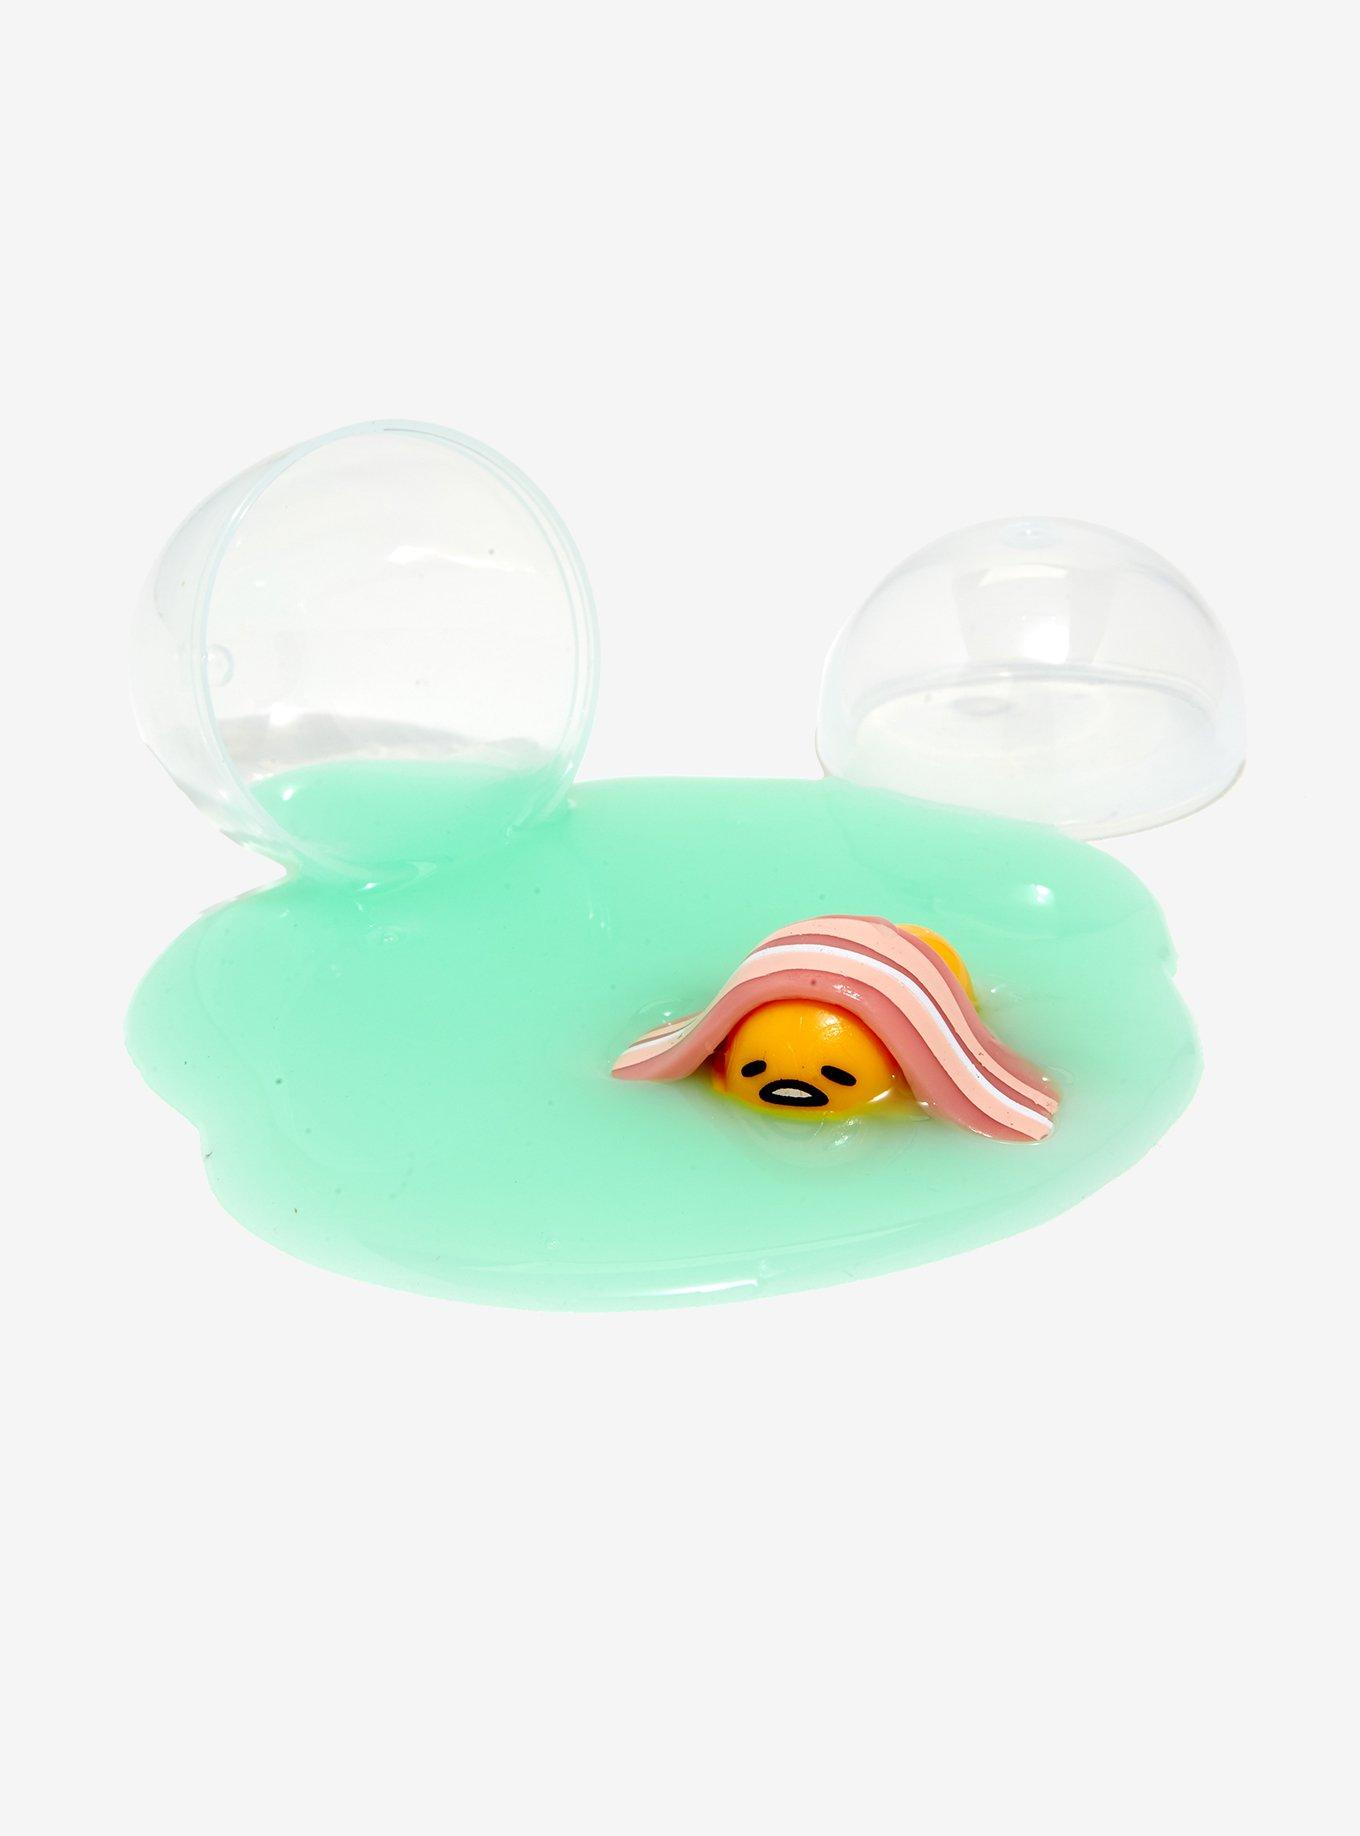 Gudetama Multicolored Slime Egg Blind Box Figure, , alternate